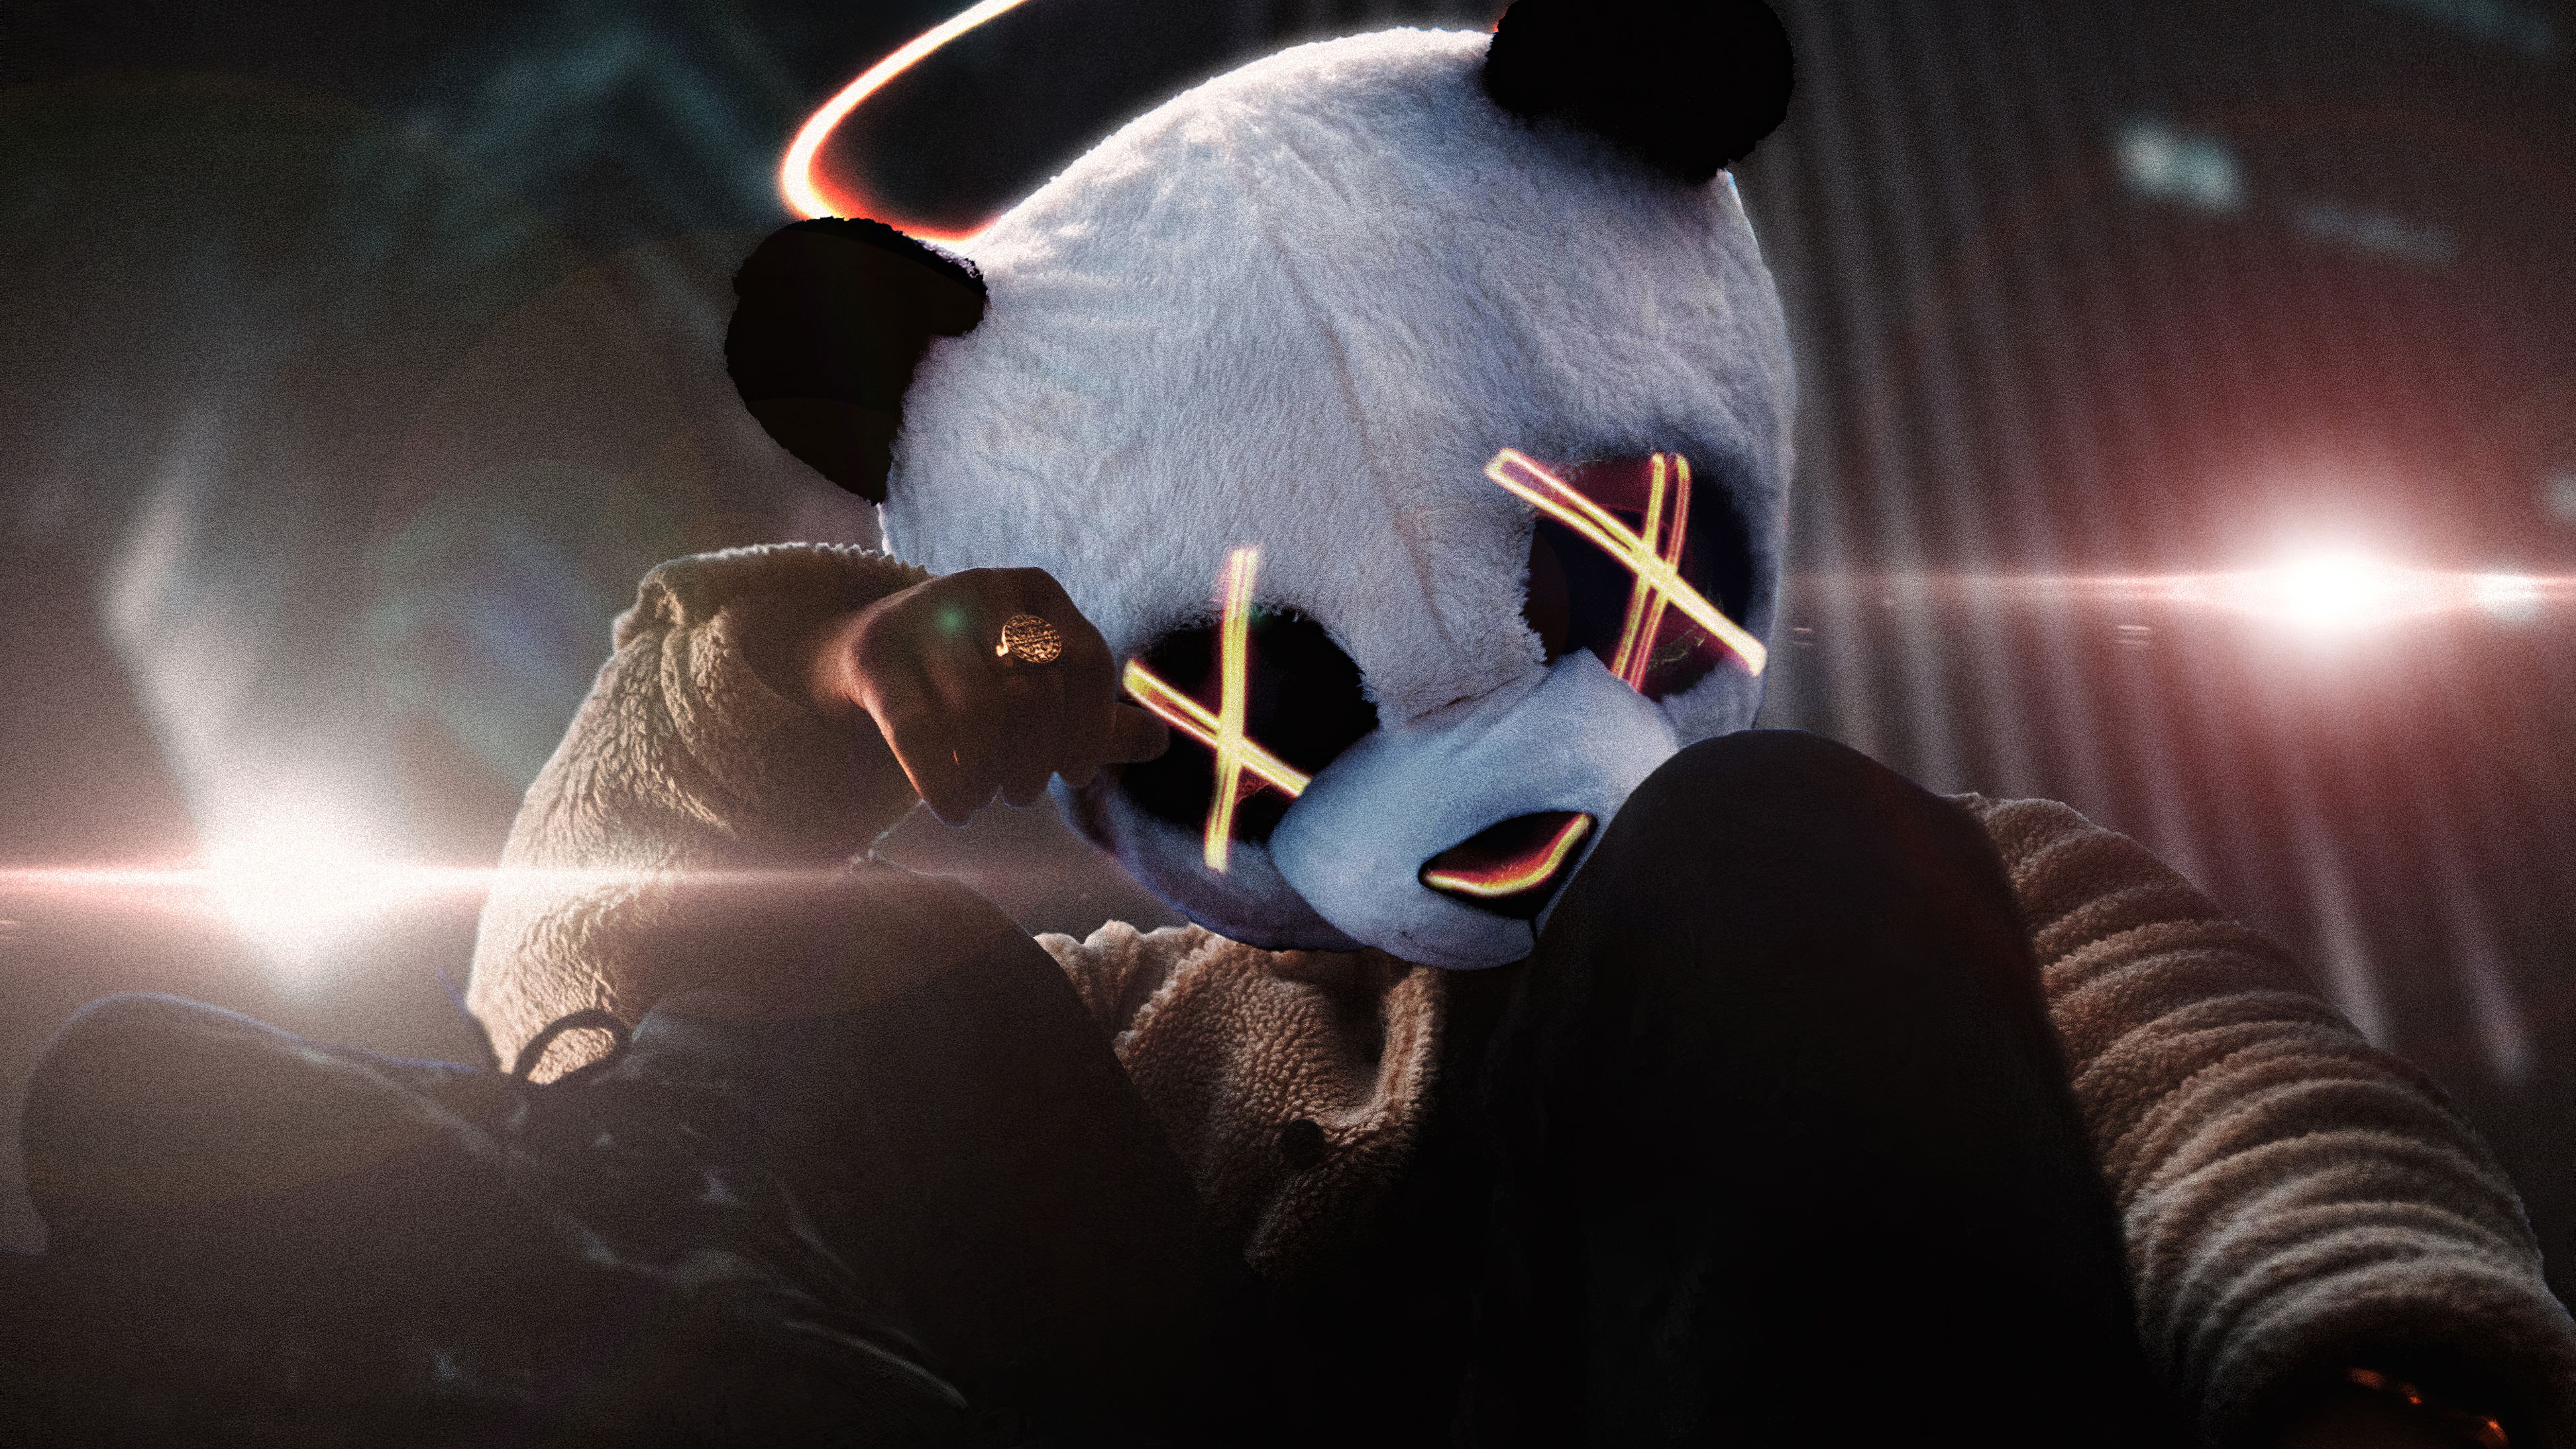 Mafia Panda 4k, HD Artist, 4k Wallpaper, Image, Background, Photo and Picture